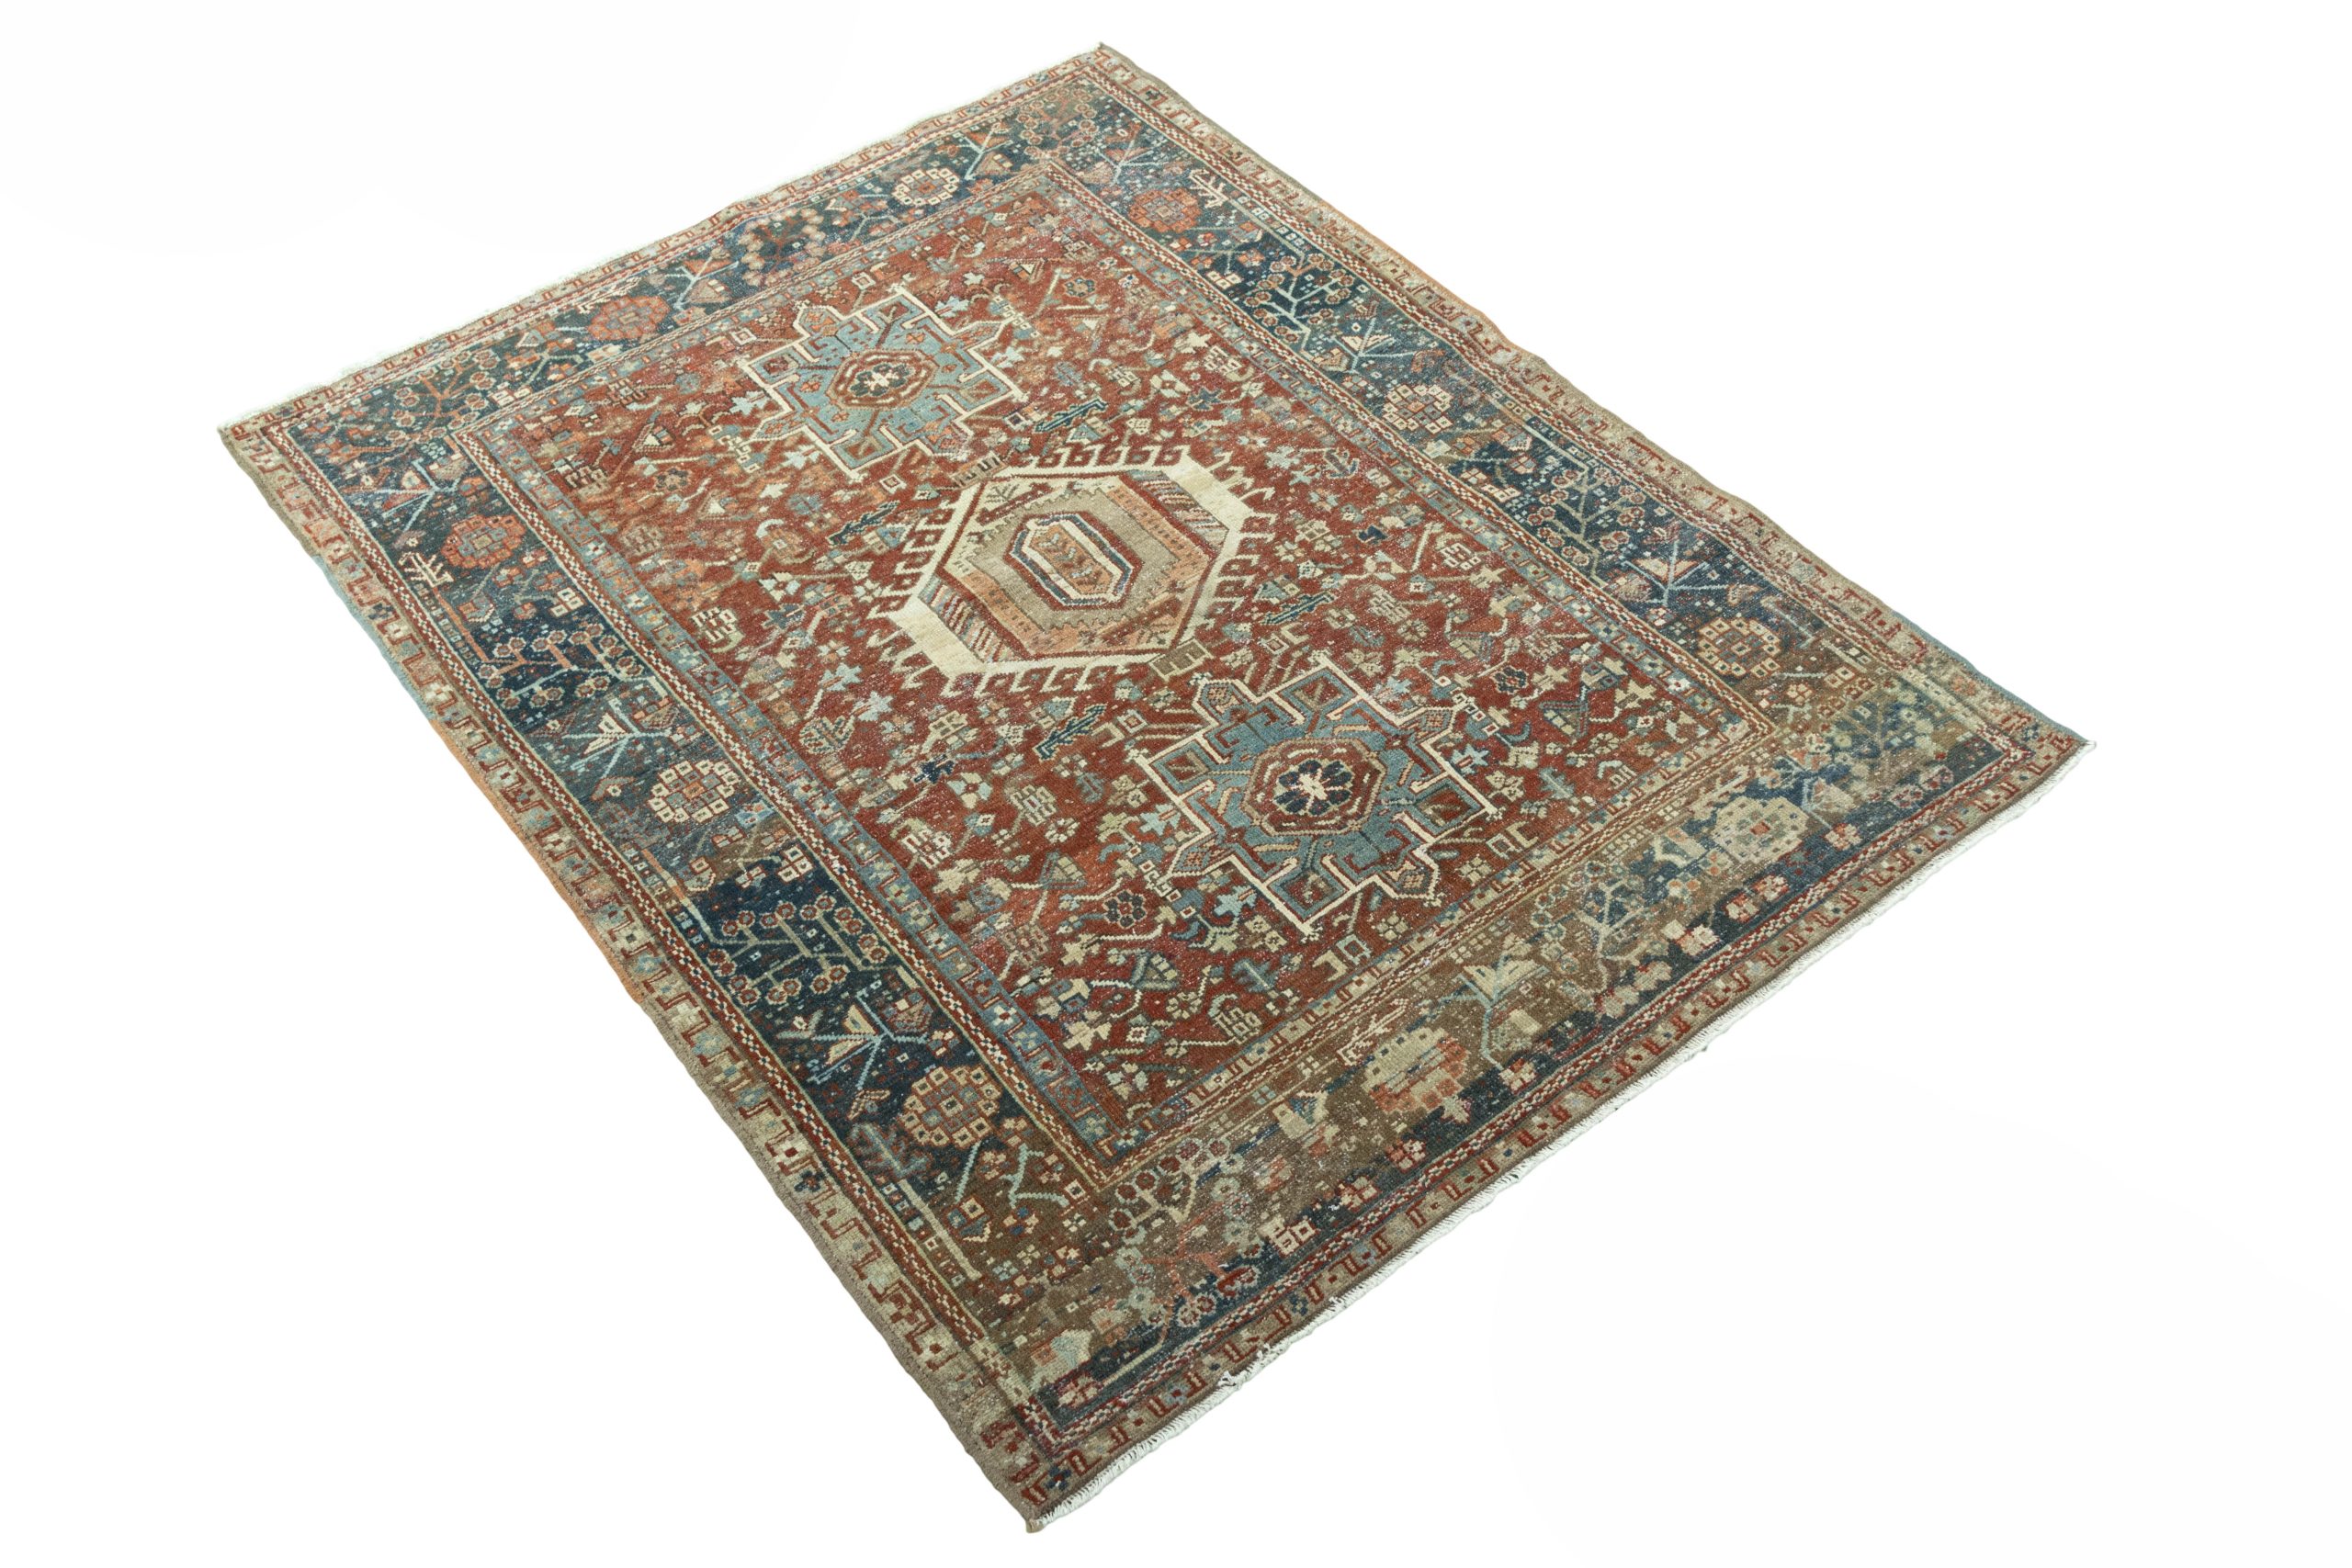 Rug# 48070, vintage Karajeh Heriz, wool pile, natural vegetable dyes, circa 1935, size 188x142 cm (3)